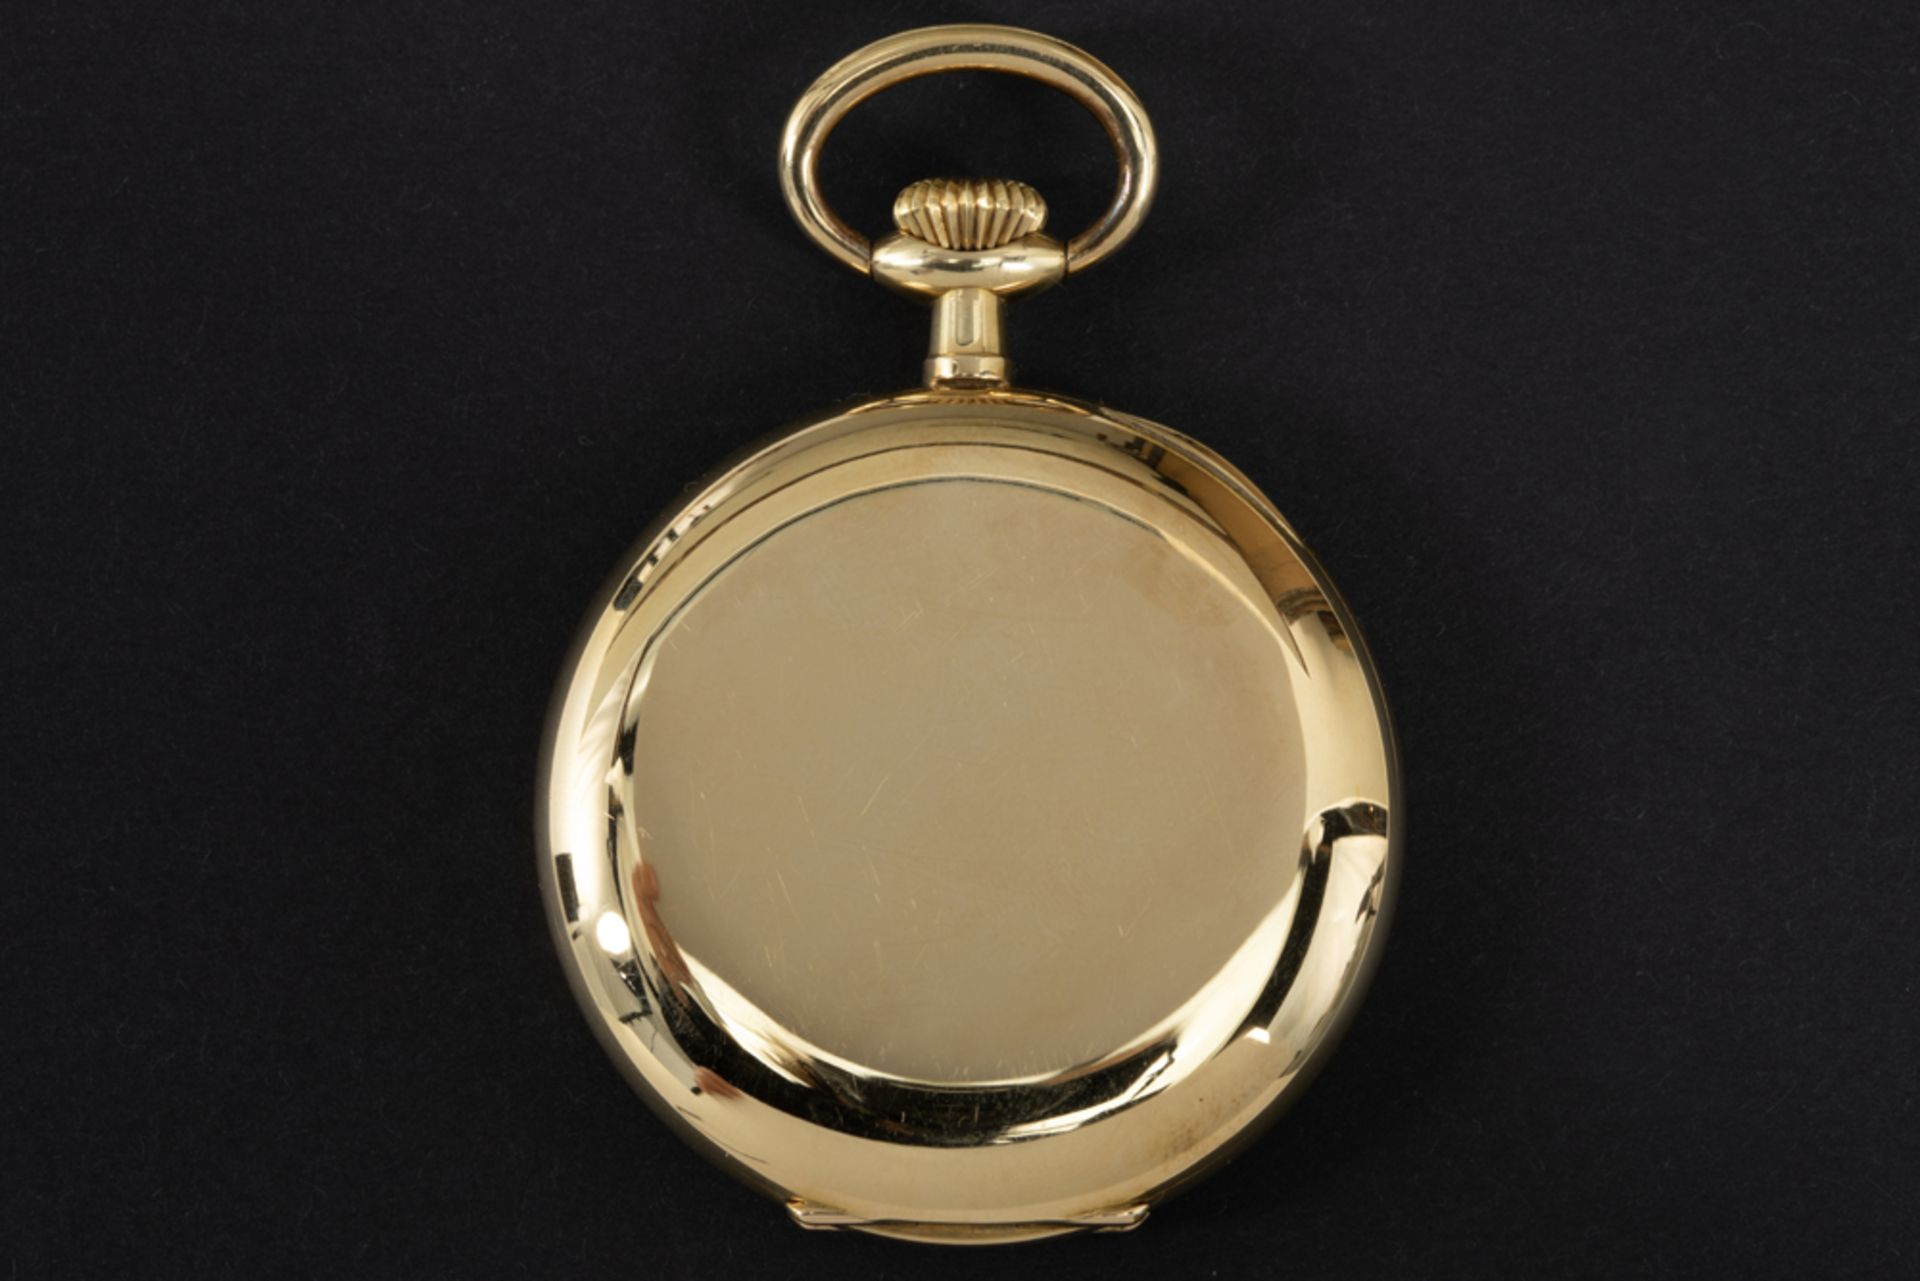 Chronomètre Croissant marked Art Deco pocket watch with its case in yellow gold (18 carat) || - Bild 2 aus 4